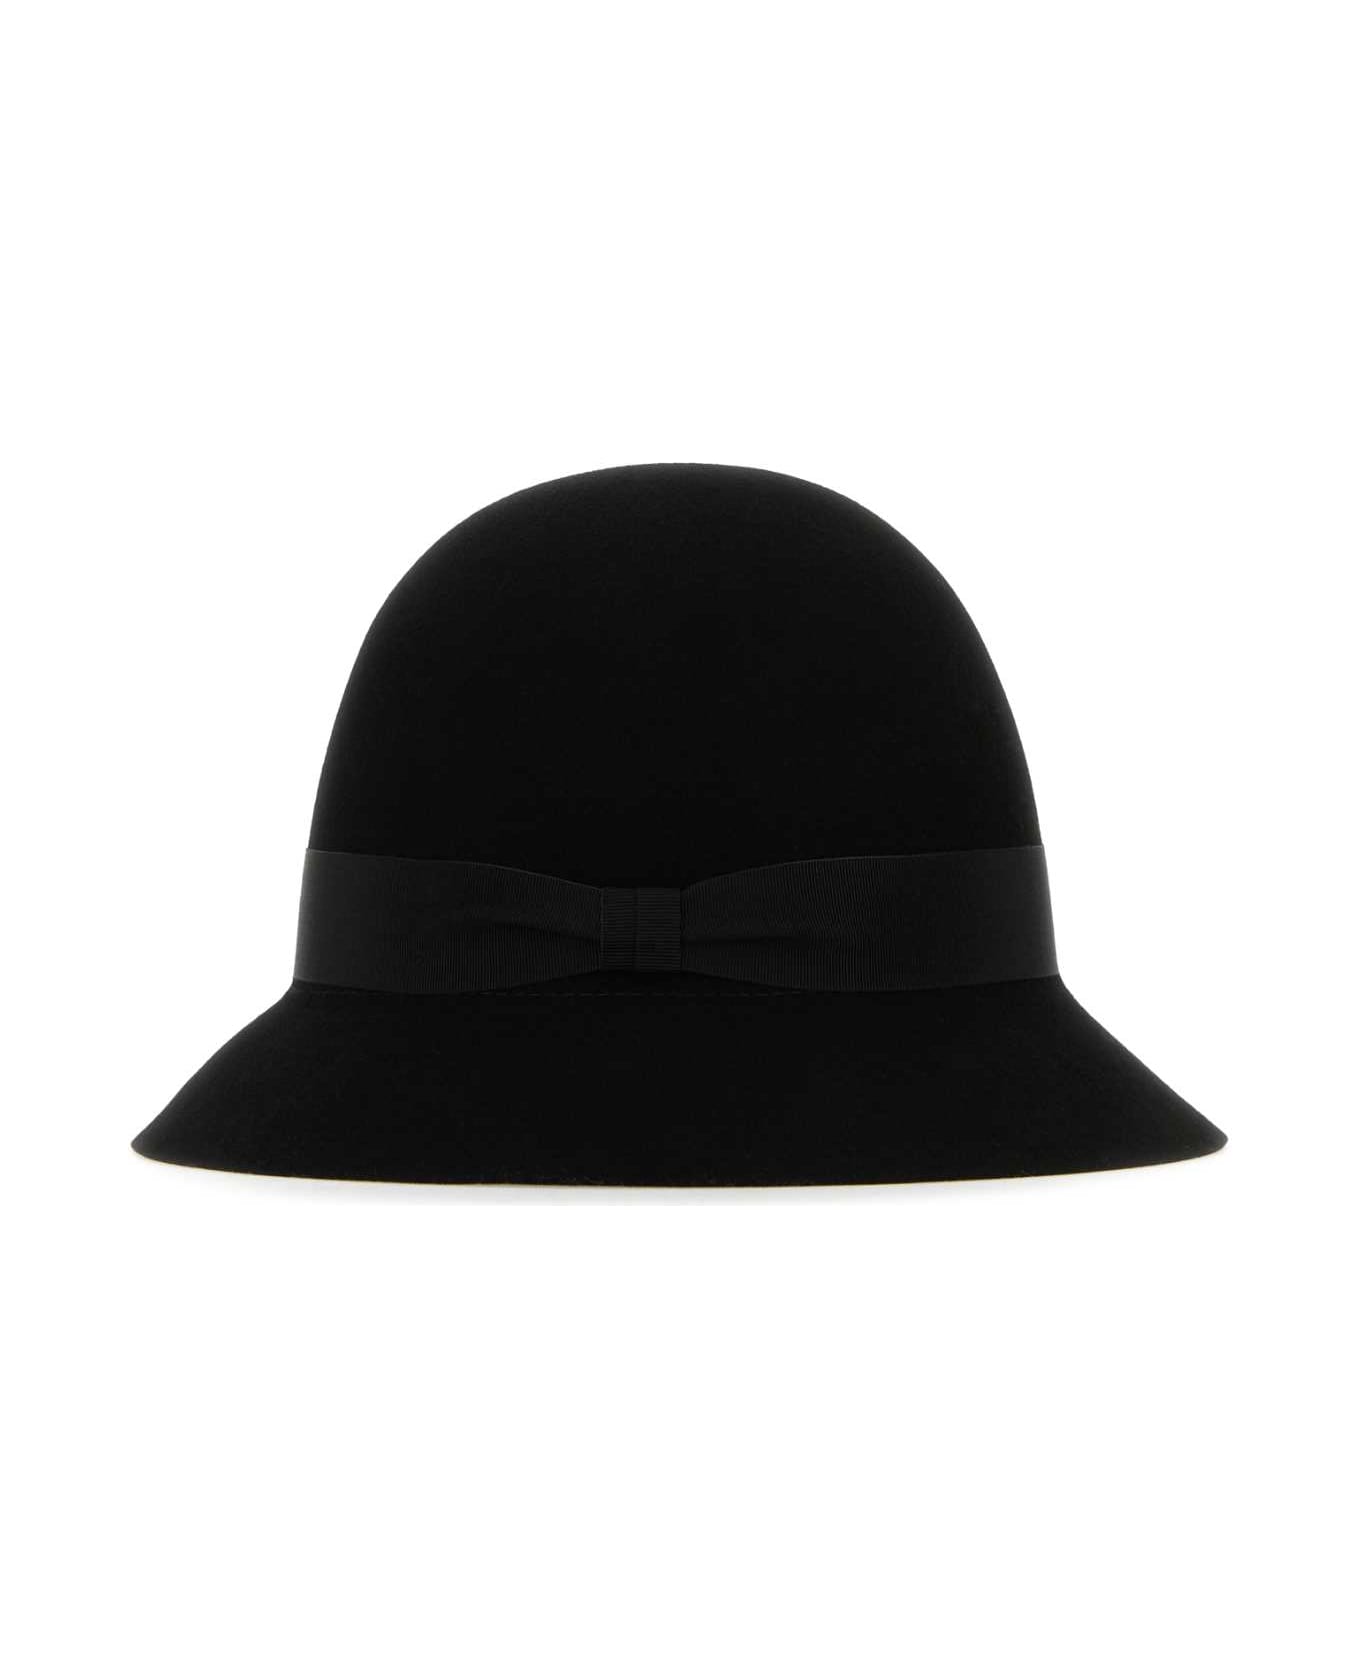 Helen Kaminski Black Felt Ella Conscious Bucket Hat - BLACKBLACK